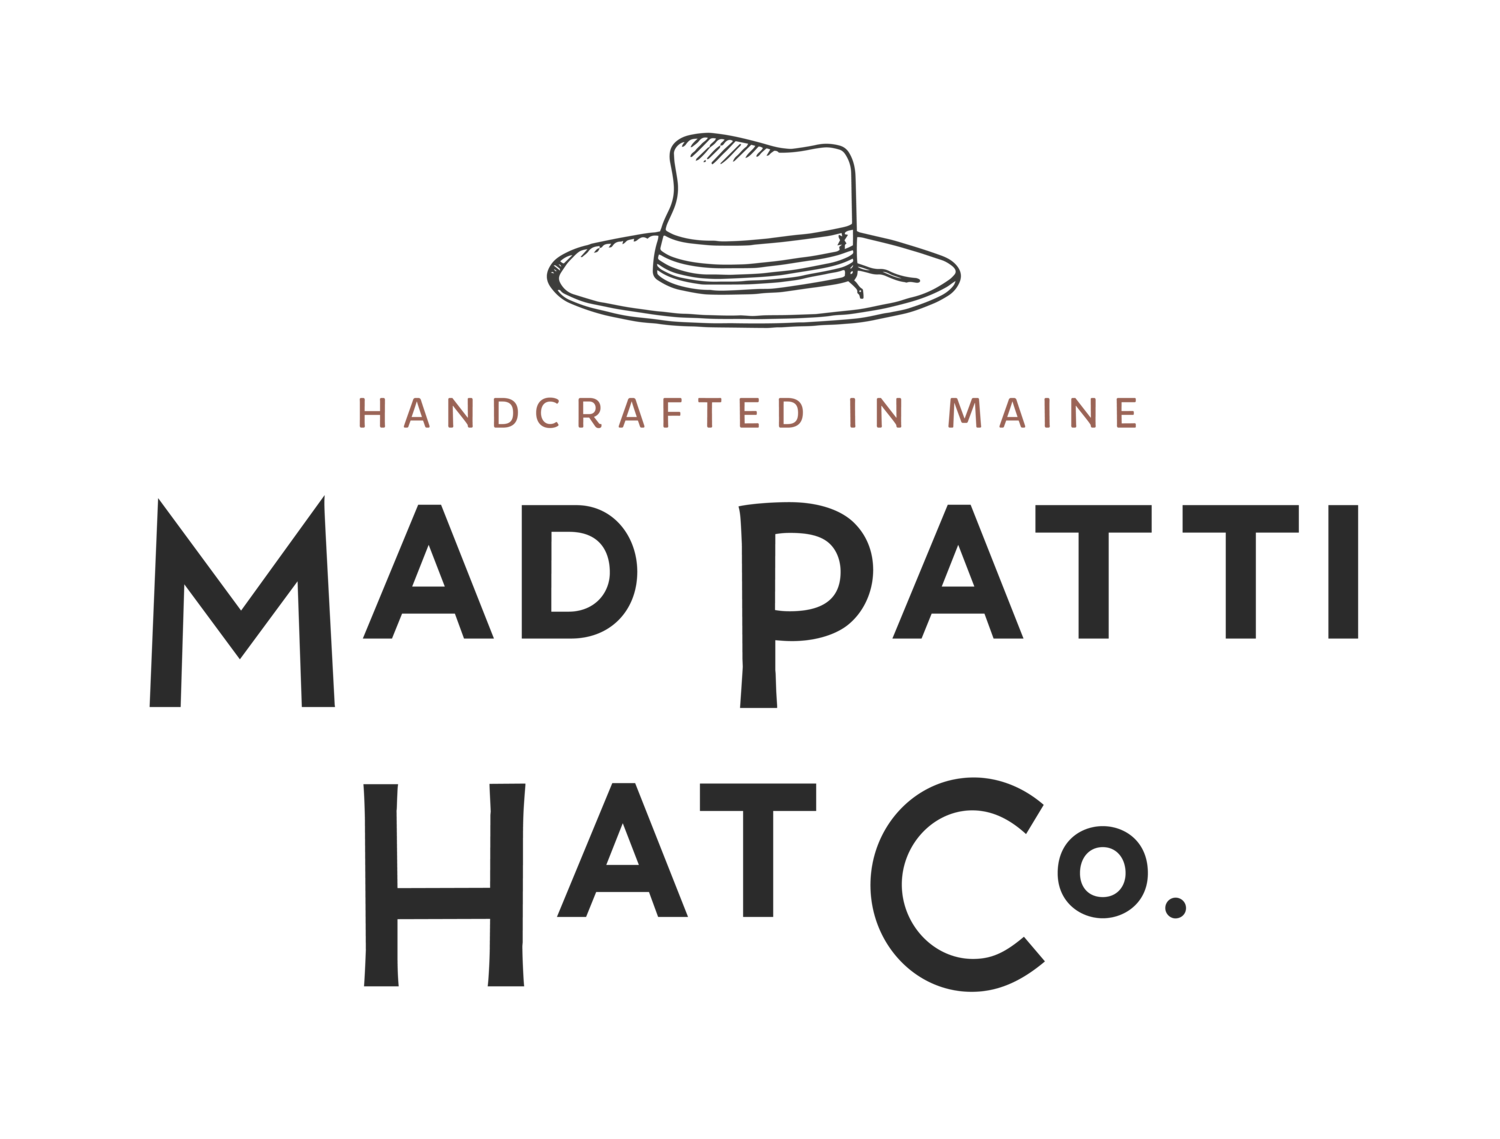 Mad Patti Hat Co.